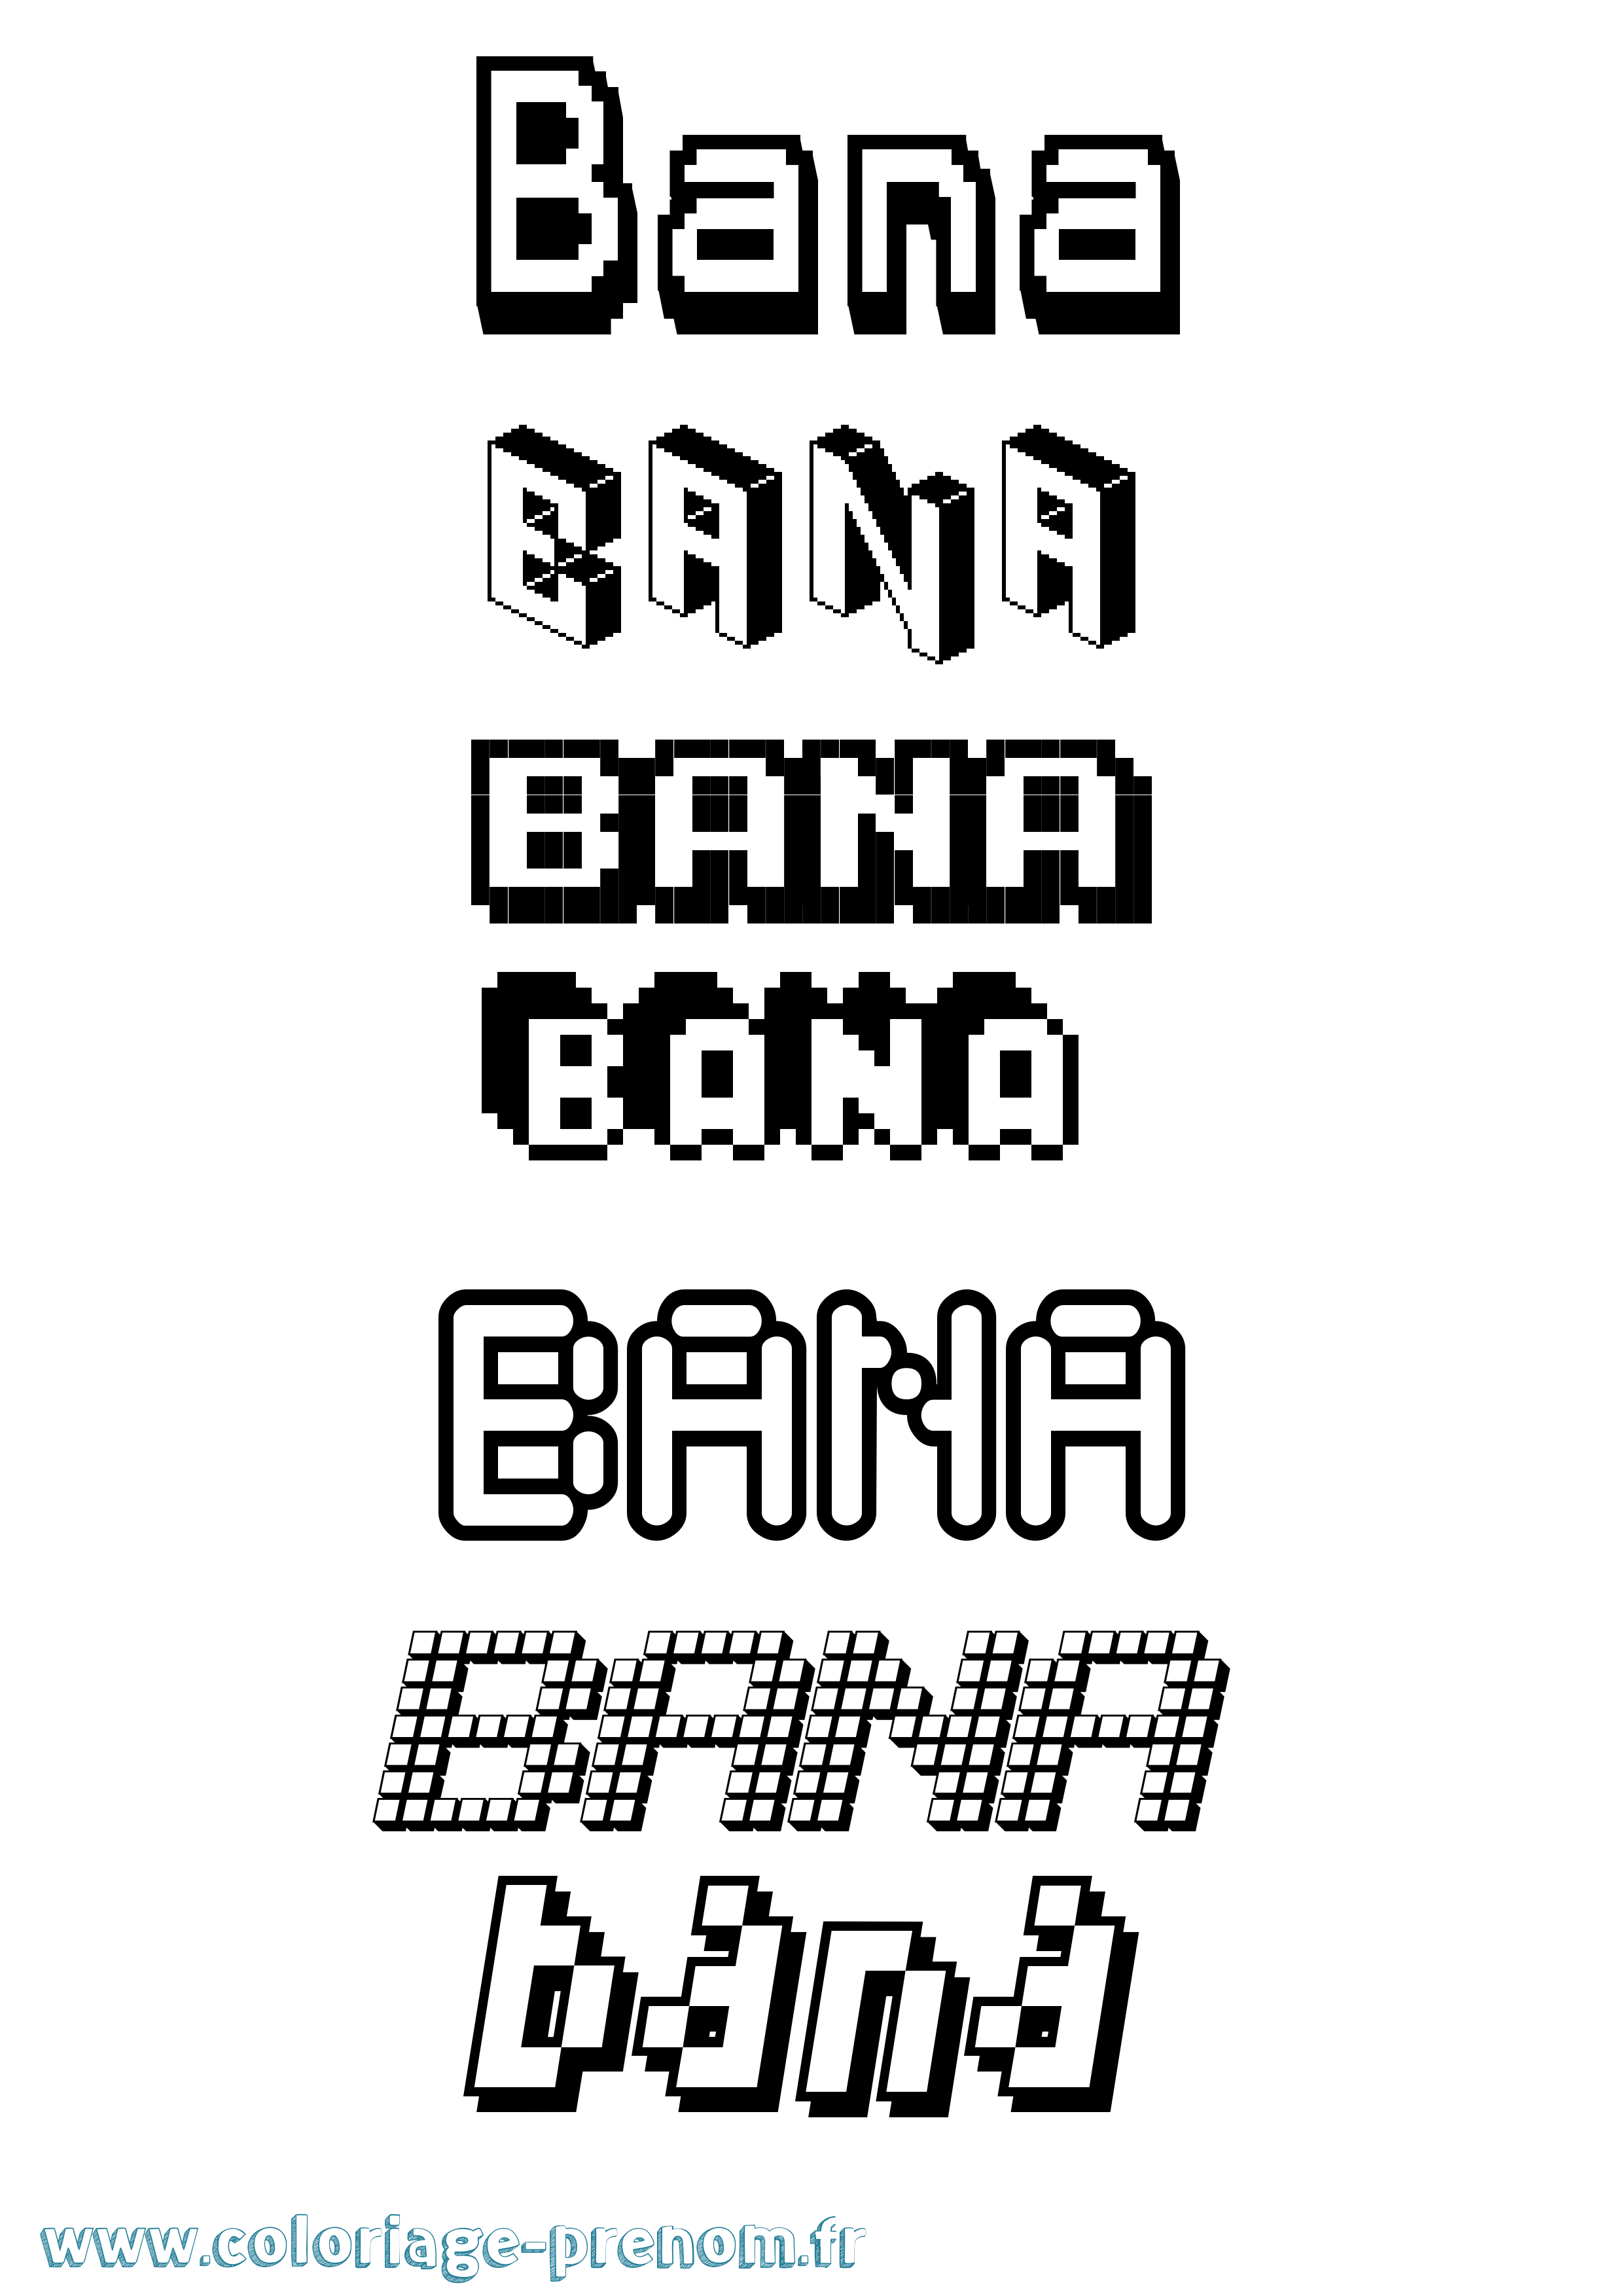 Coloriage prénom Bana Pixel